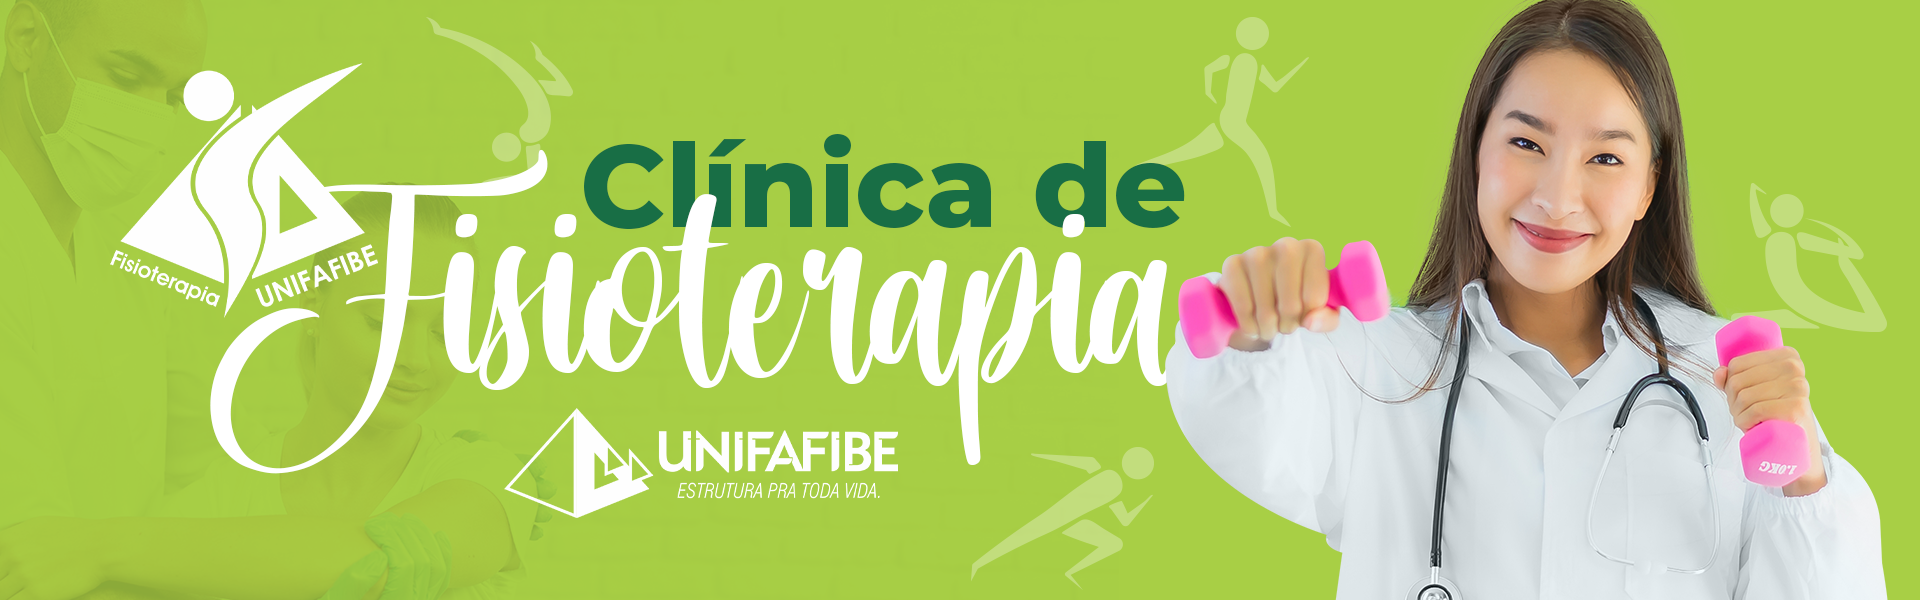 Banner Fisioterapia Unifafibe